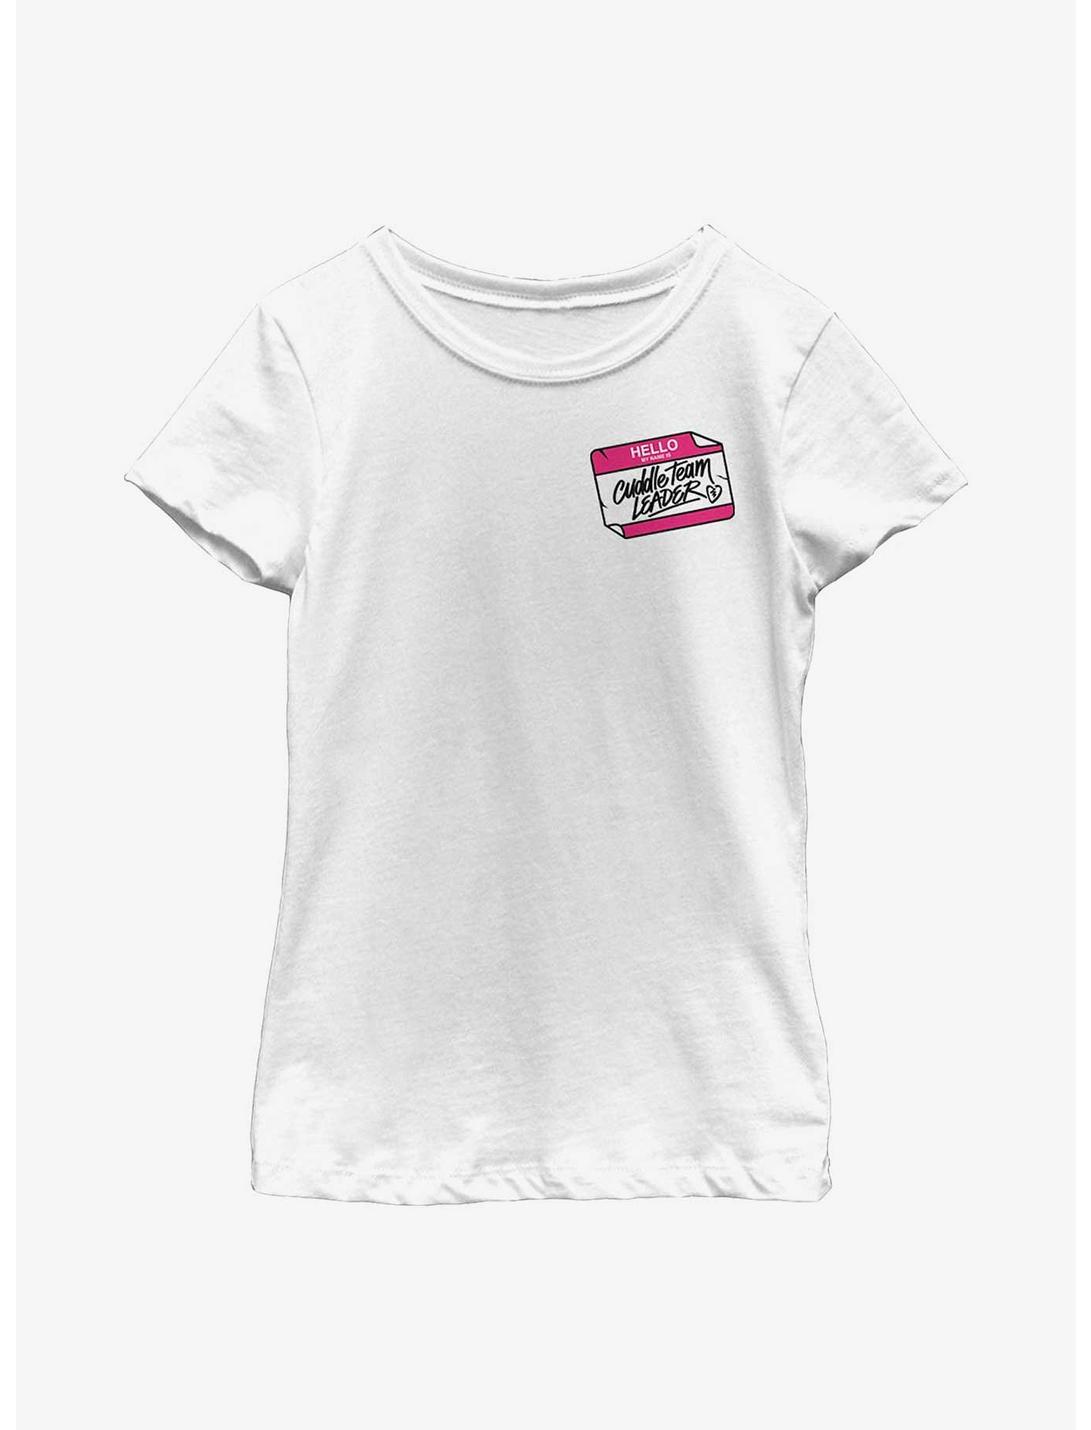 Fortnite Cuddle Team Leader Youth Girls T-Shirt, WHITE, hi-res